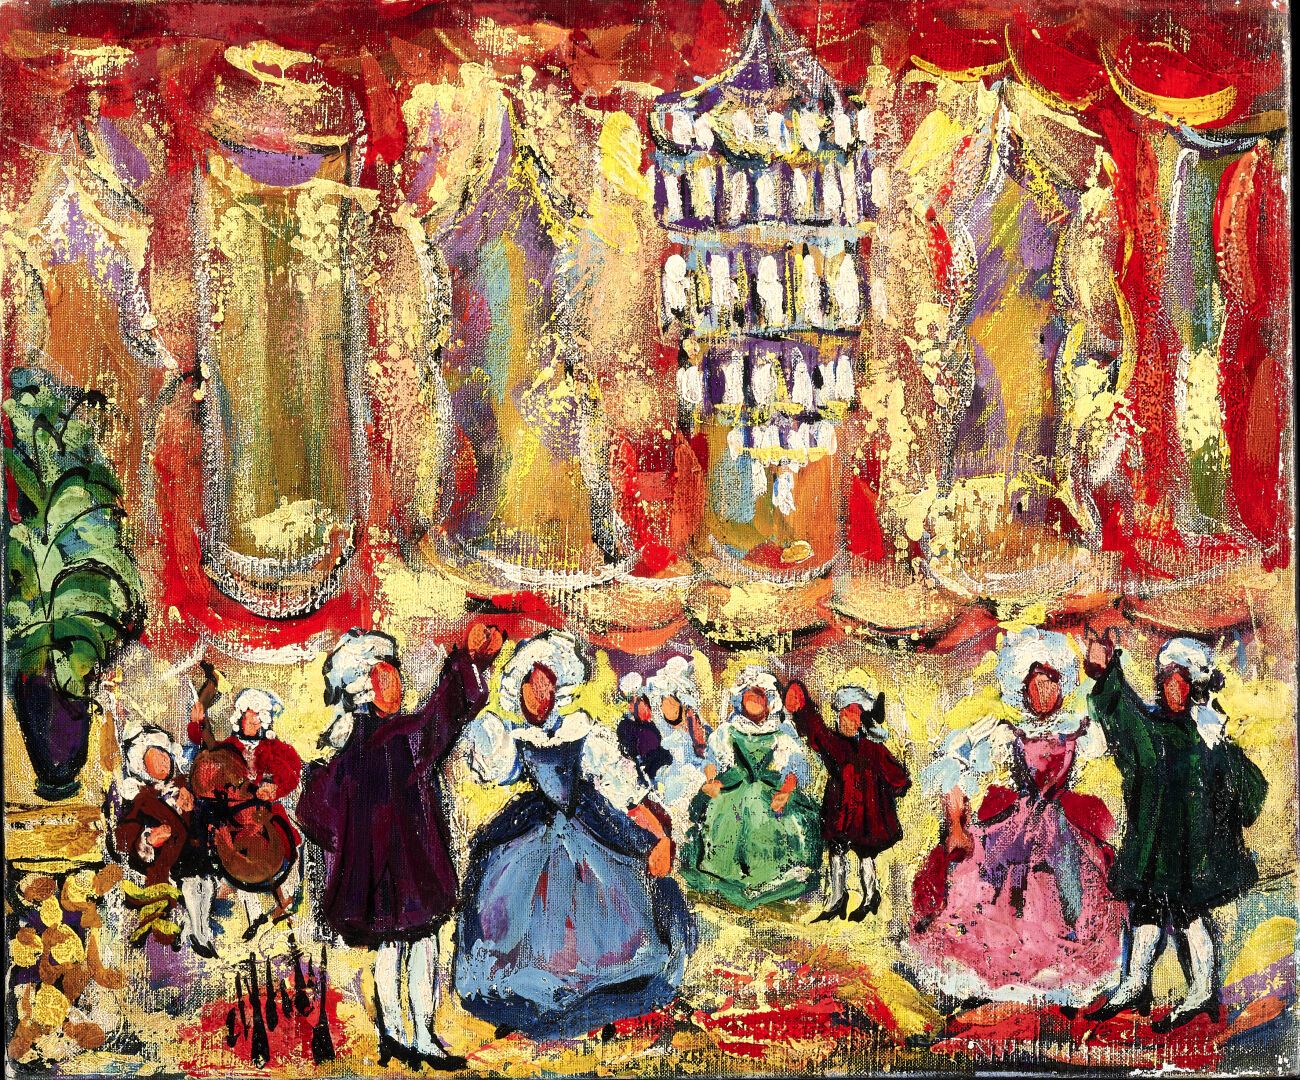 Null 亨利-德安蒂（1910-1998）。
"盛装之夜"。
布面油画。
左下方有签名。
46 x 55厘米。